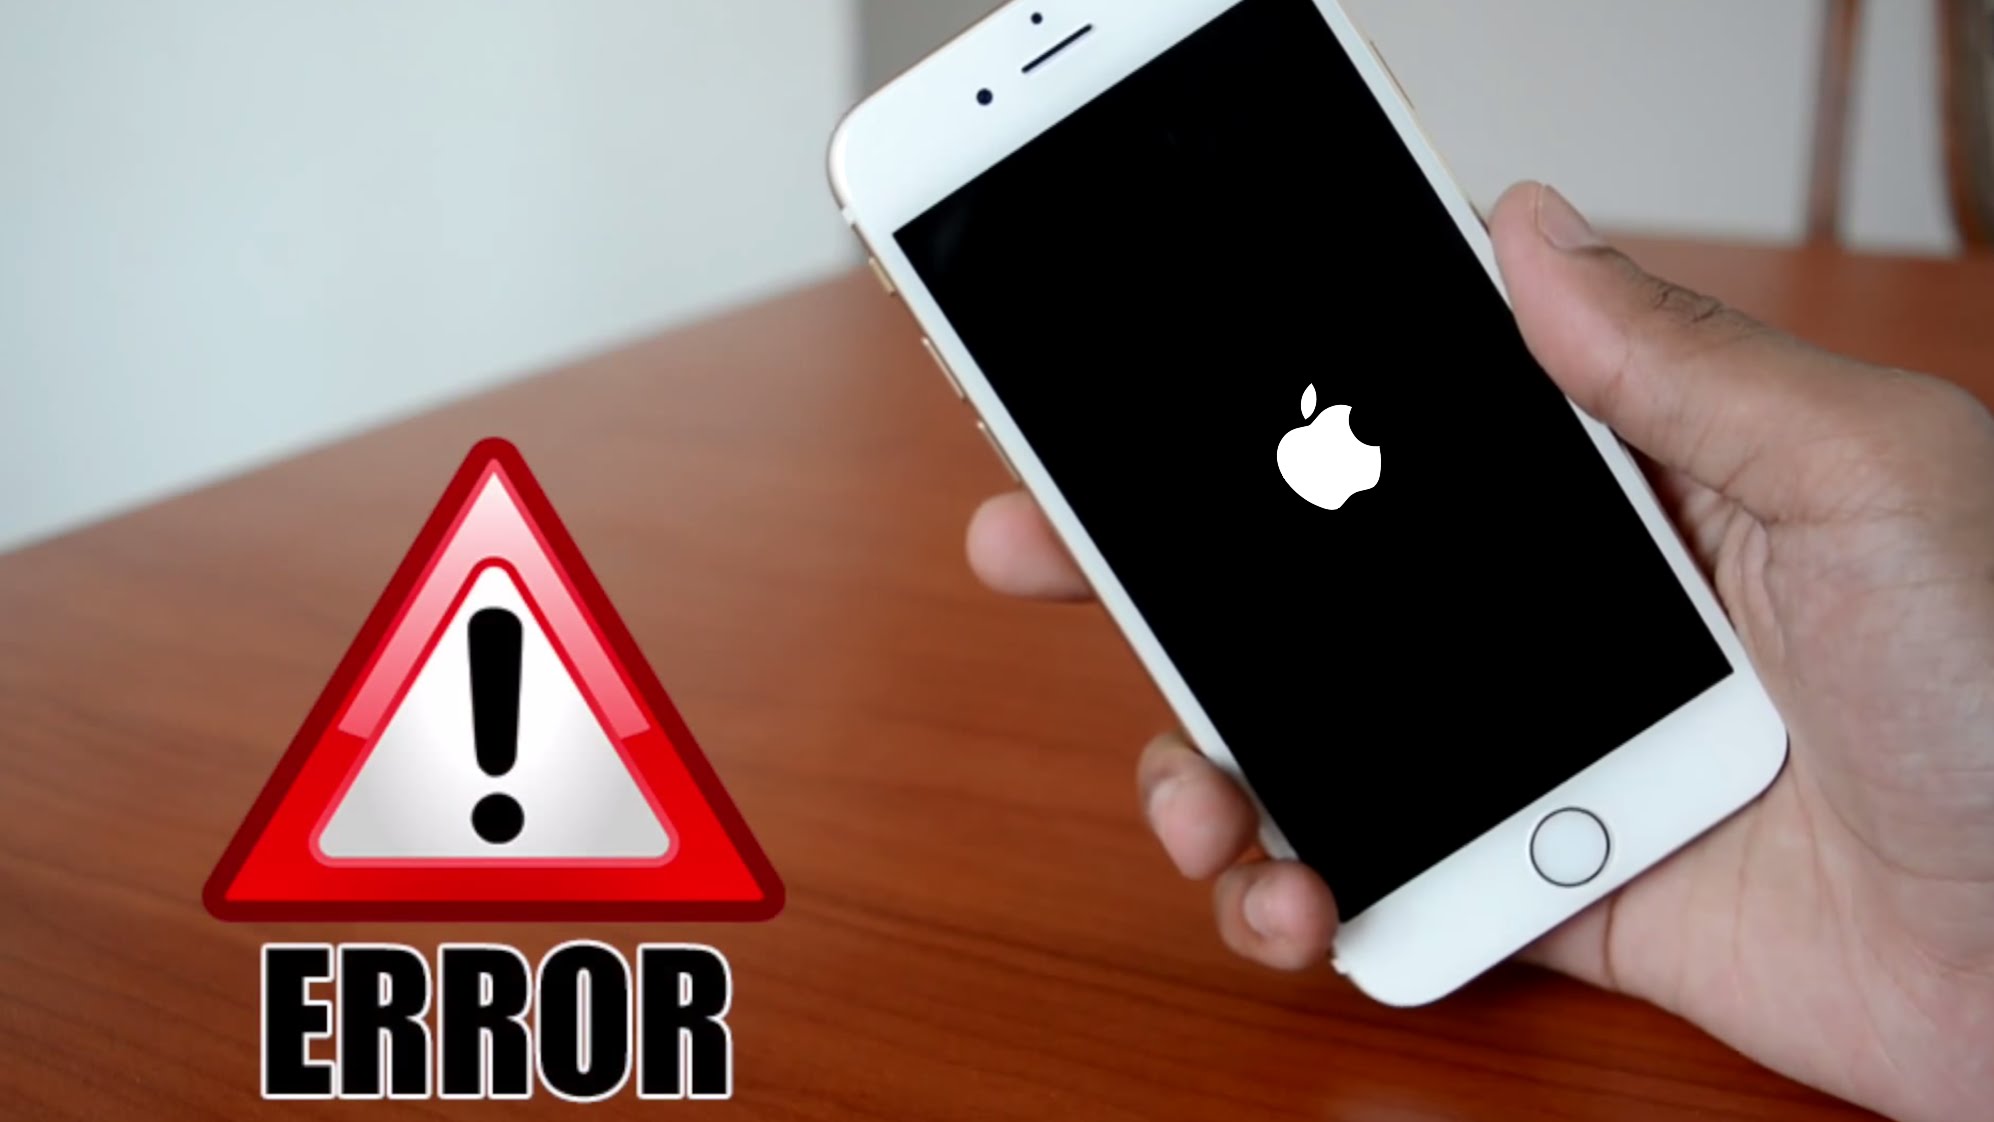 Khắc phục lỗi treo táo sau jailbreak trên iPhone iOS 9.3.3